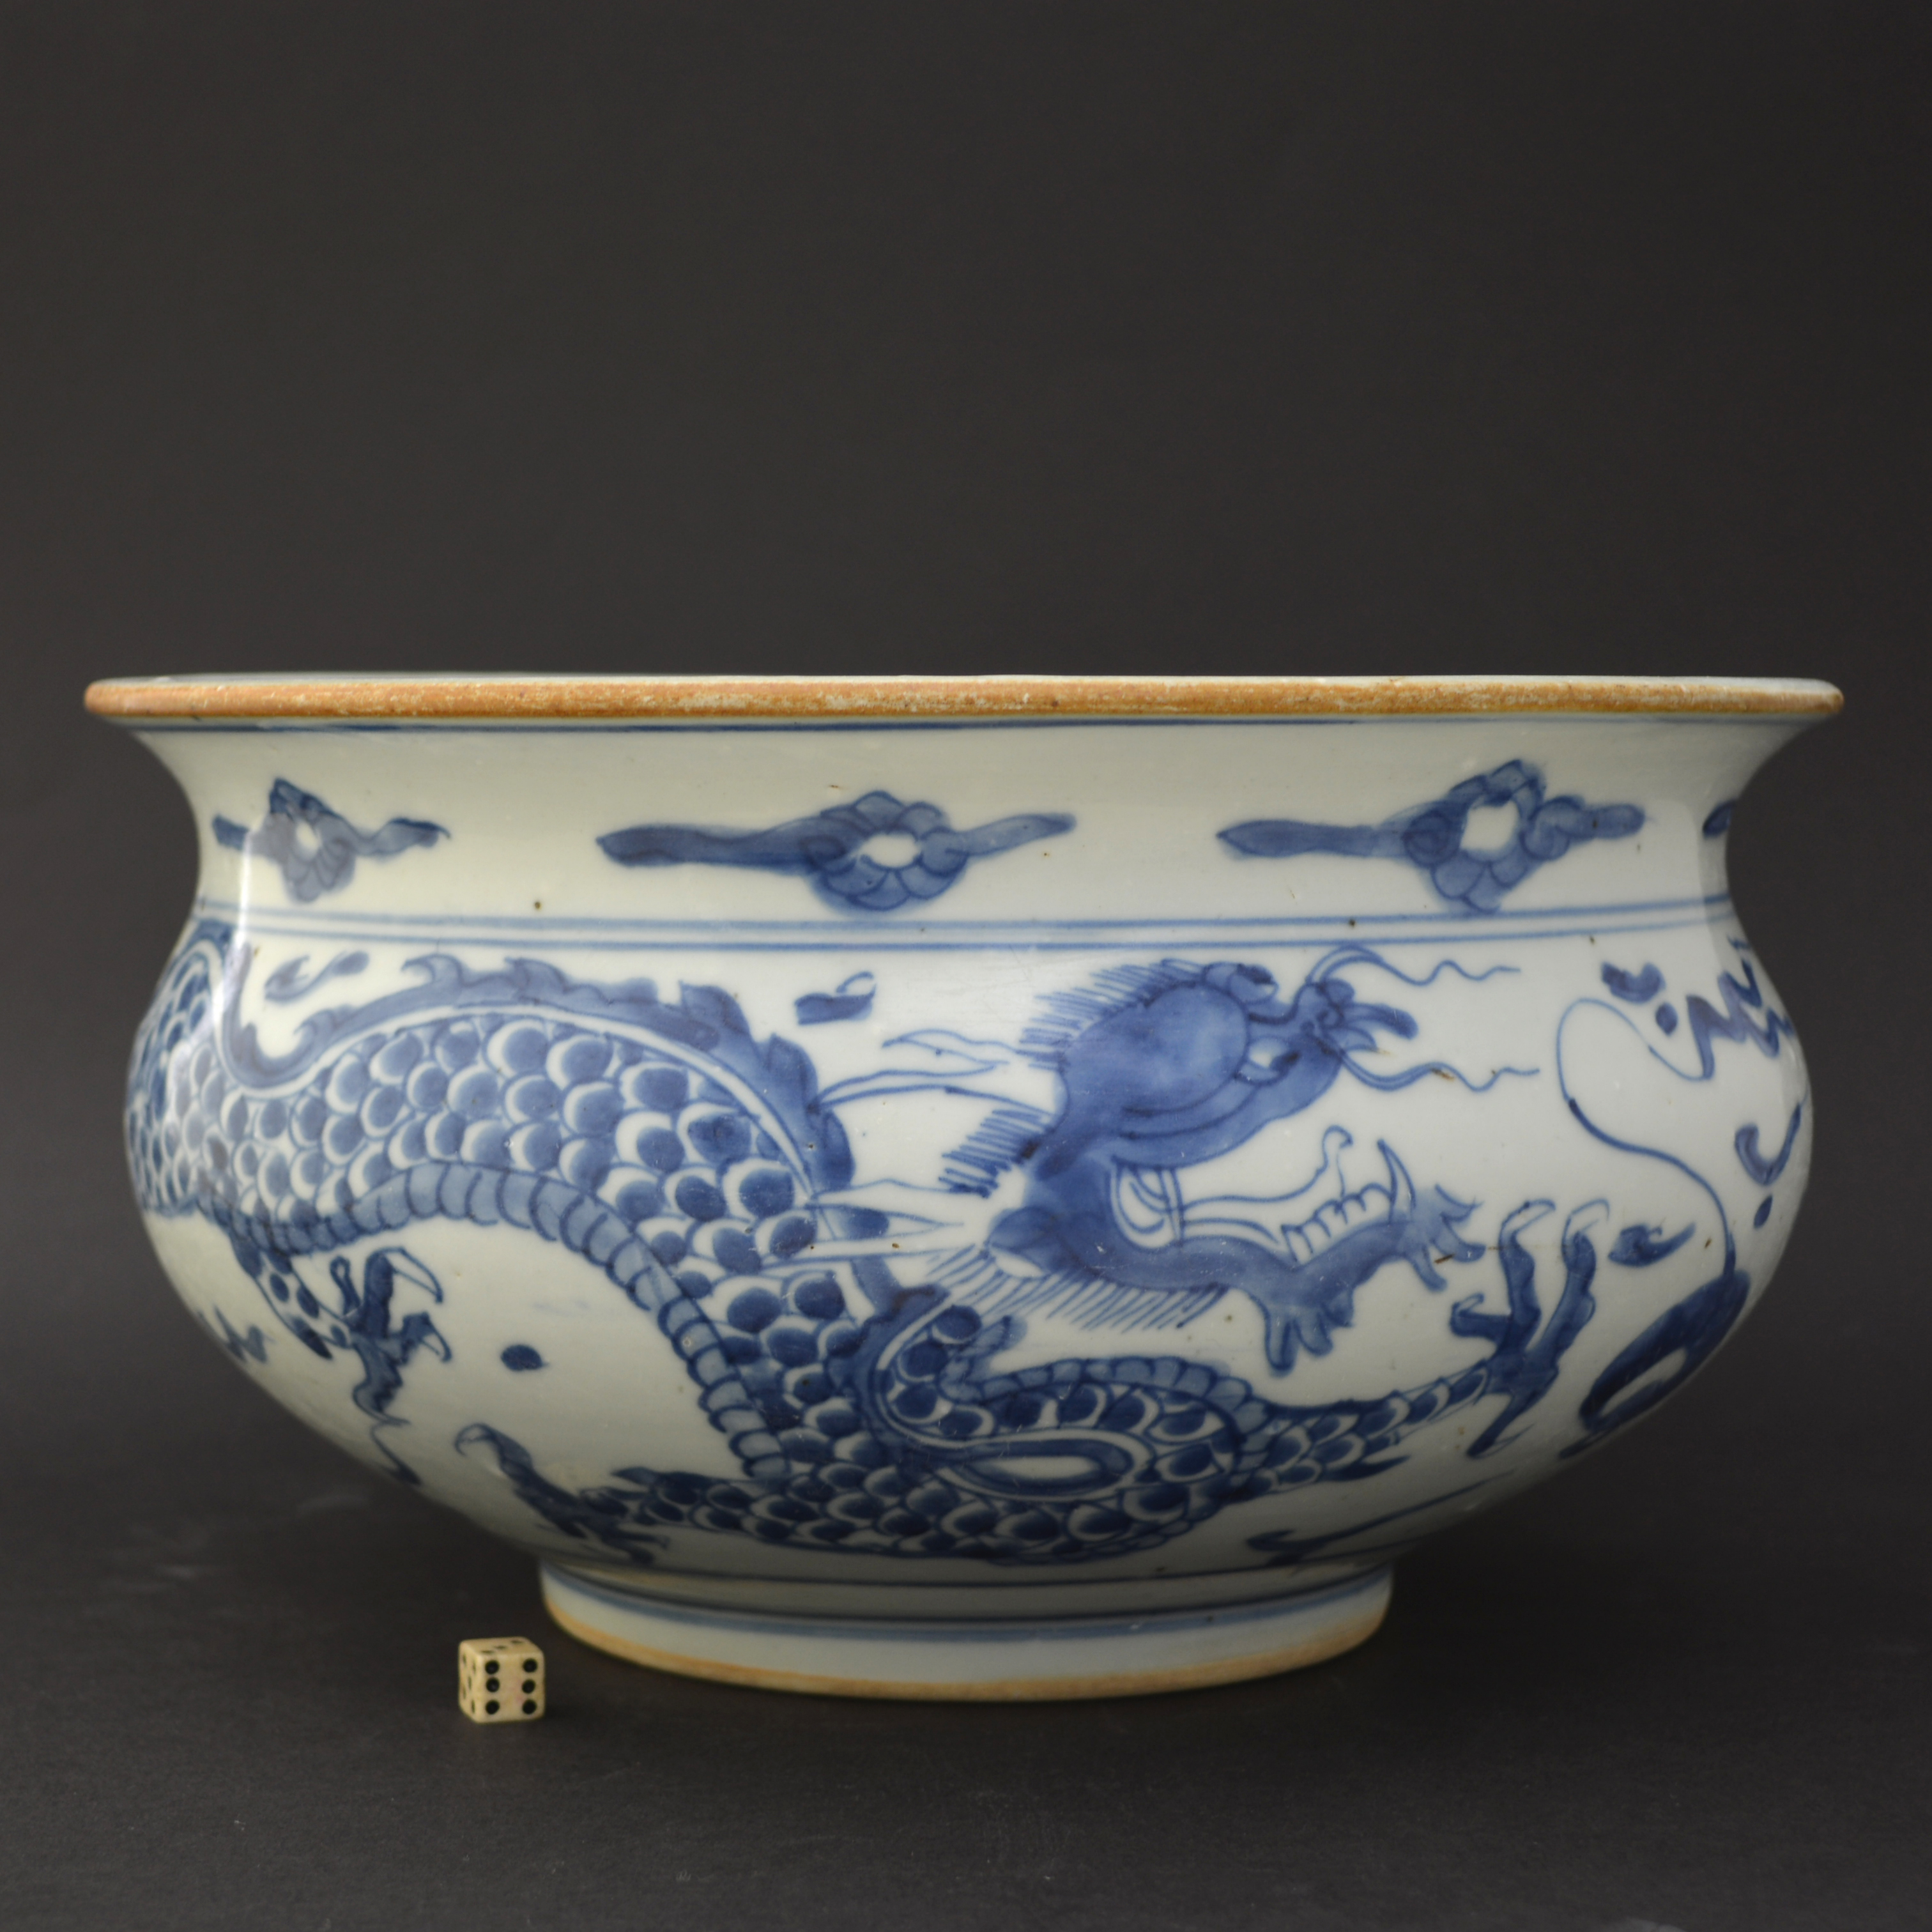 A Kangxi or Yongzheng Blue and White Porcelain Censer c.1700